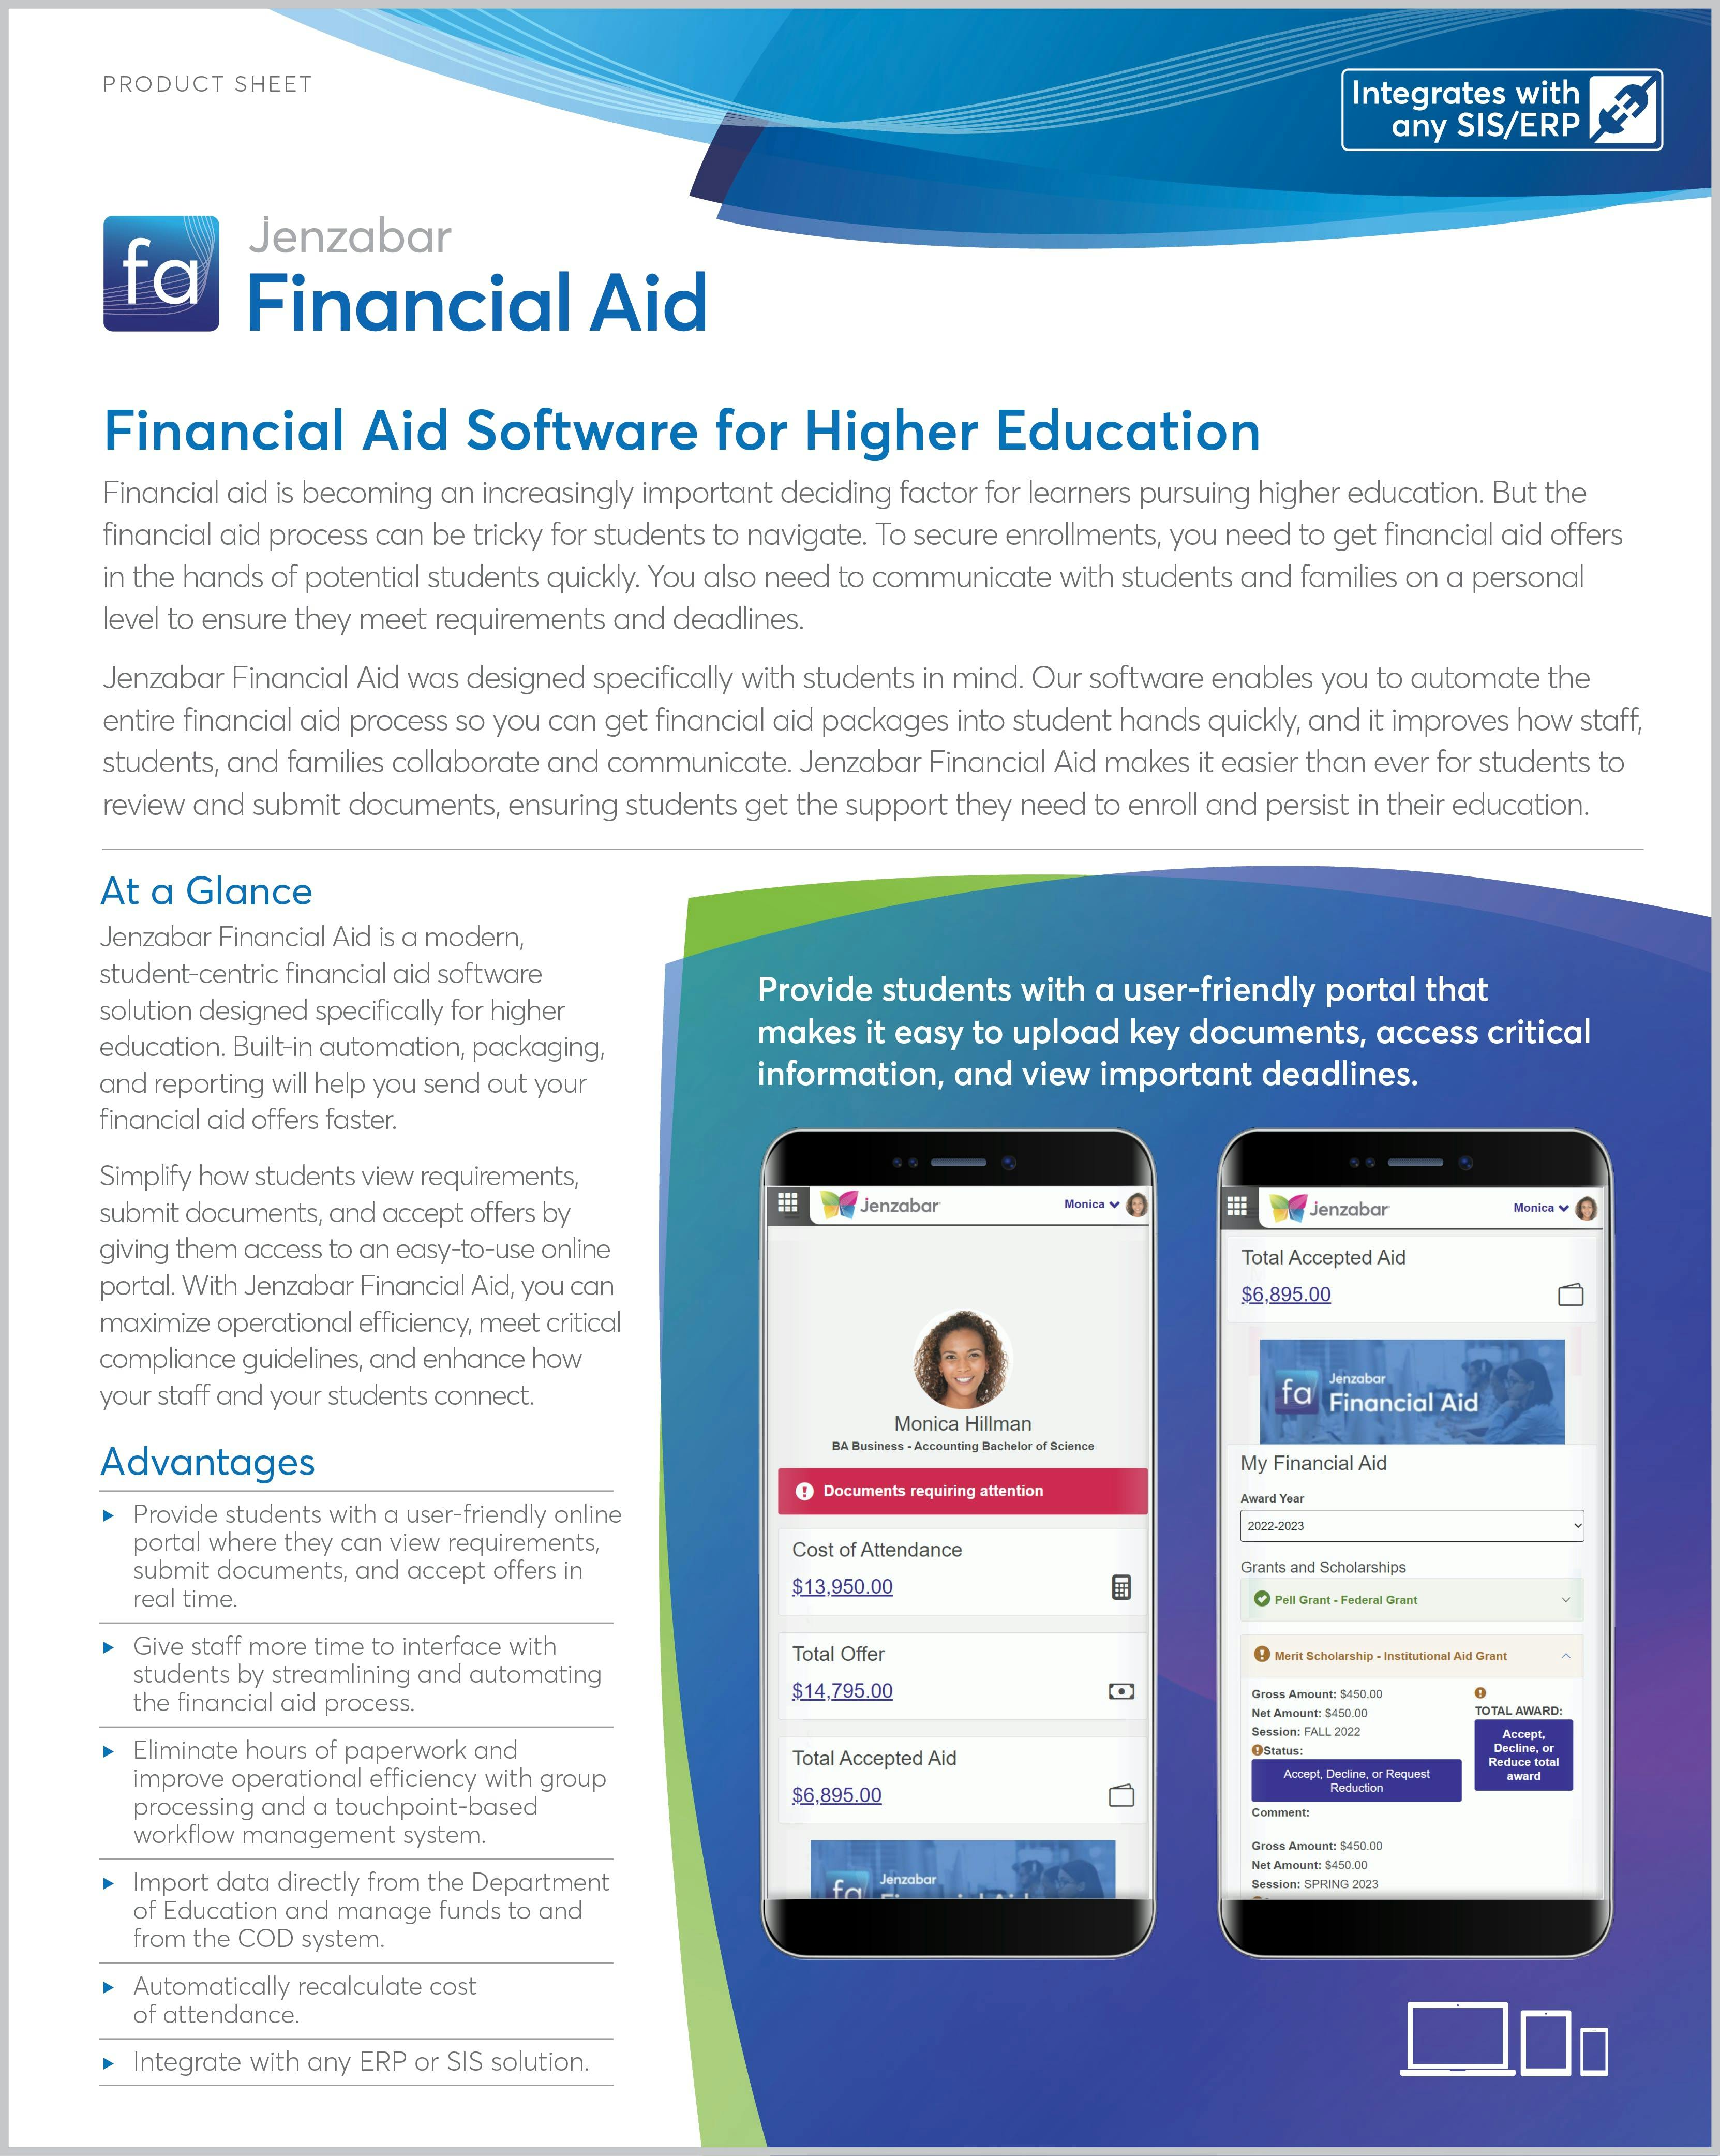 Product Sheet: Jenzabar Financial Aid